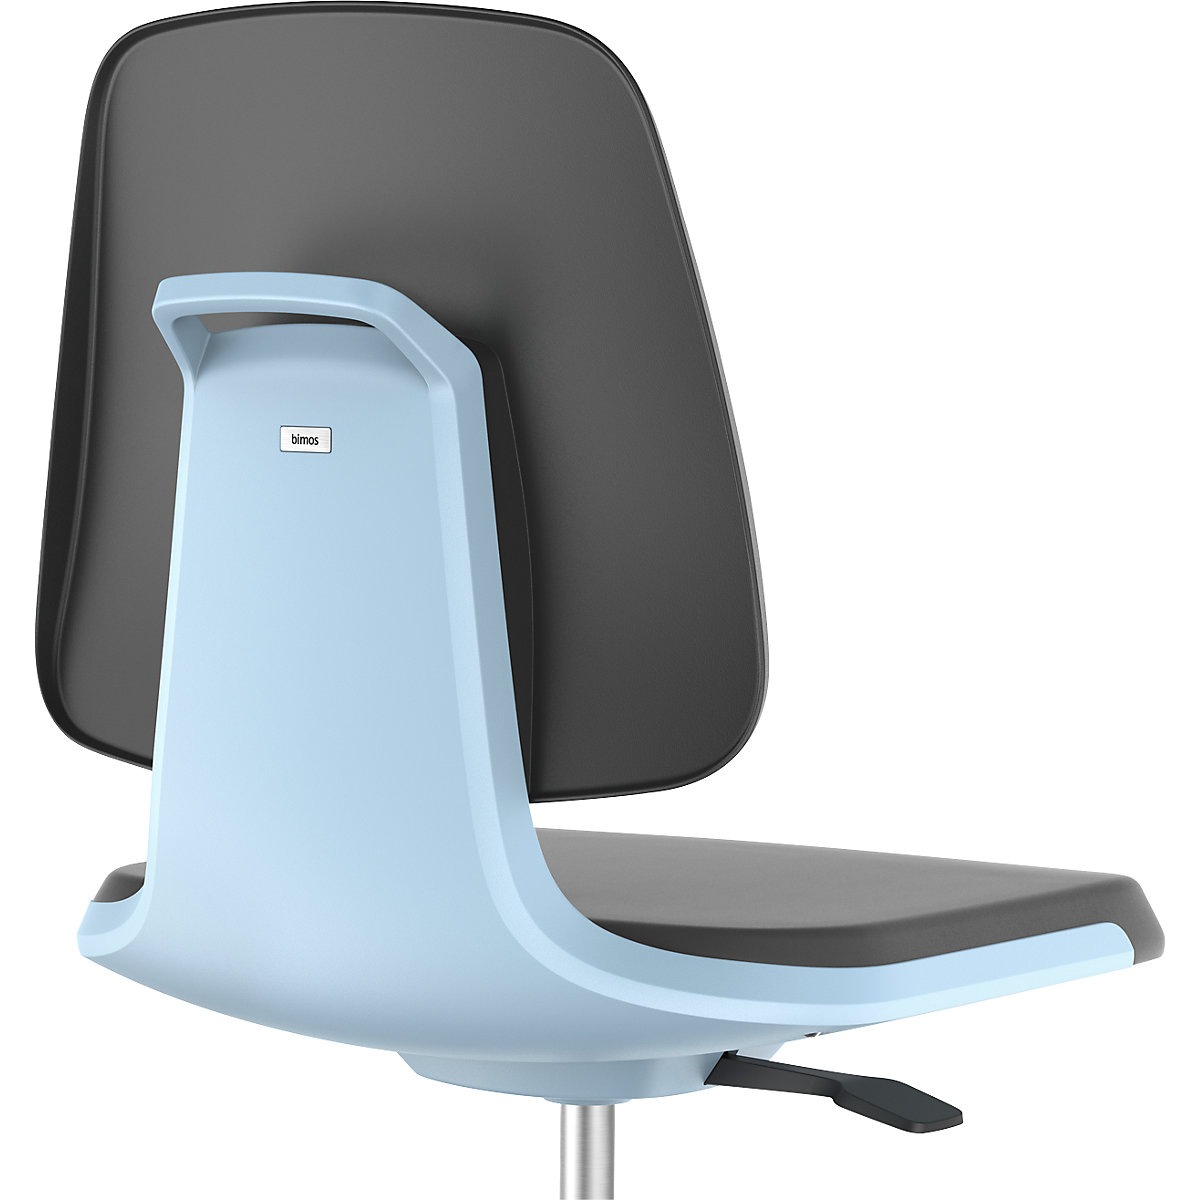 Radna okretna stolica LABSIT – bimos (Prikaz proizvoda 5)-4